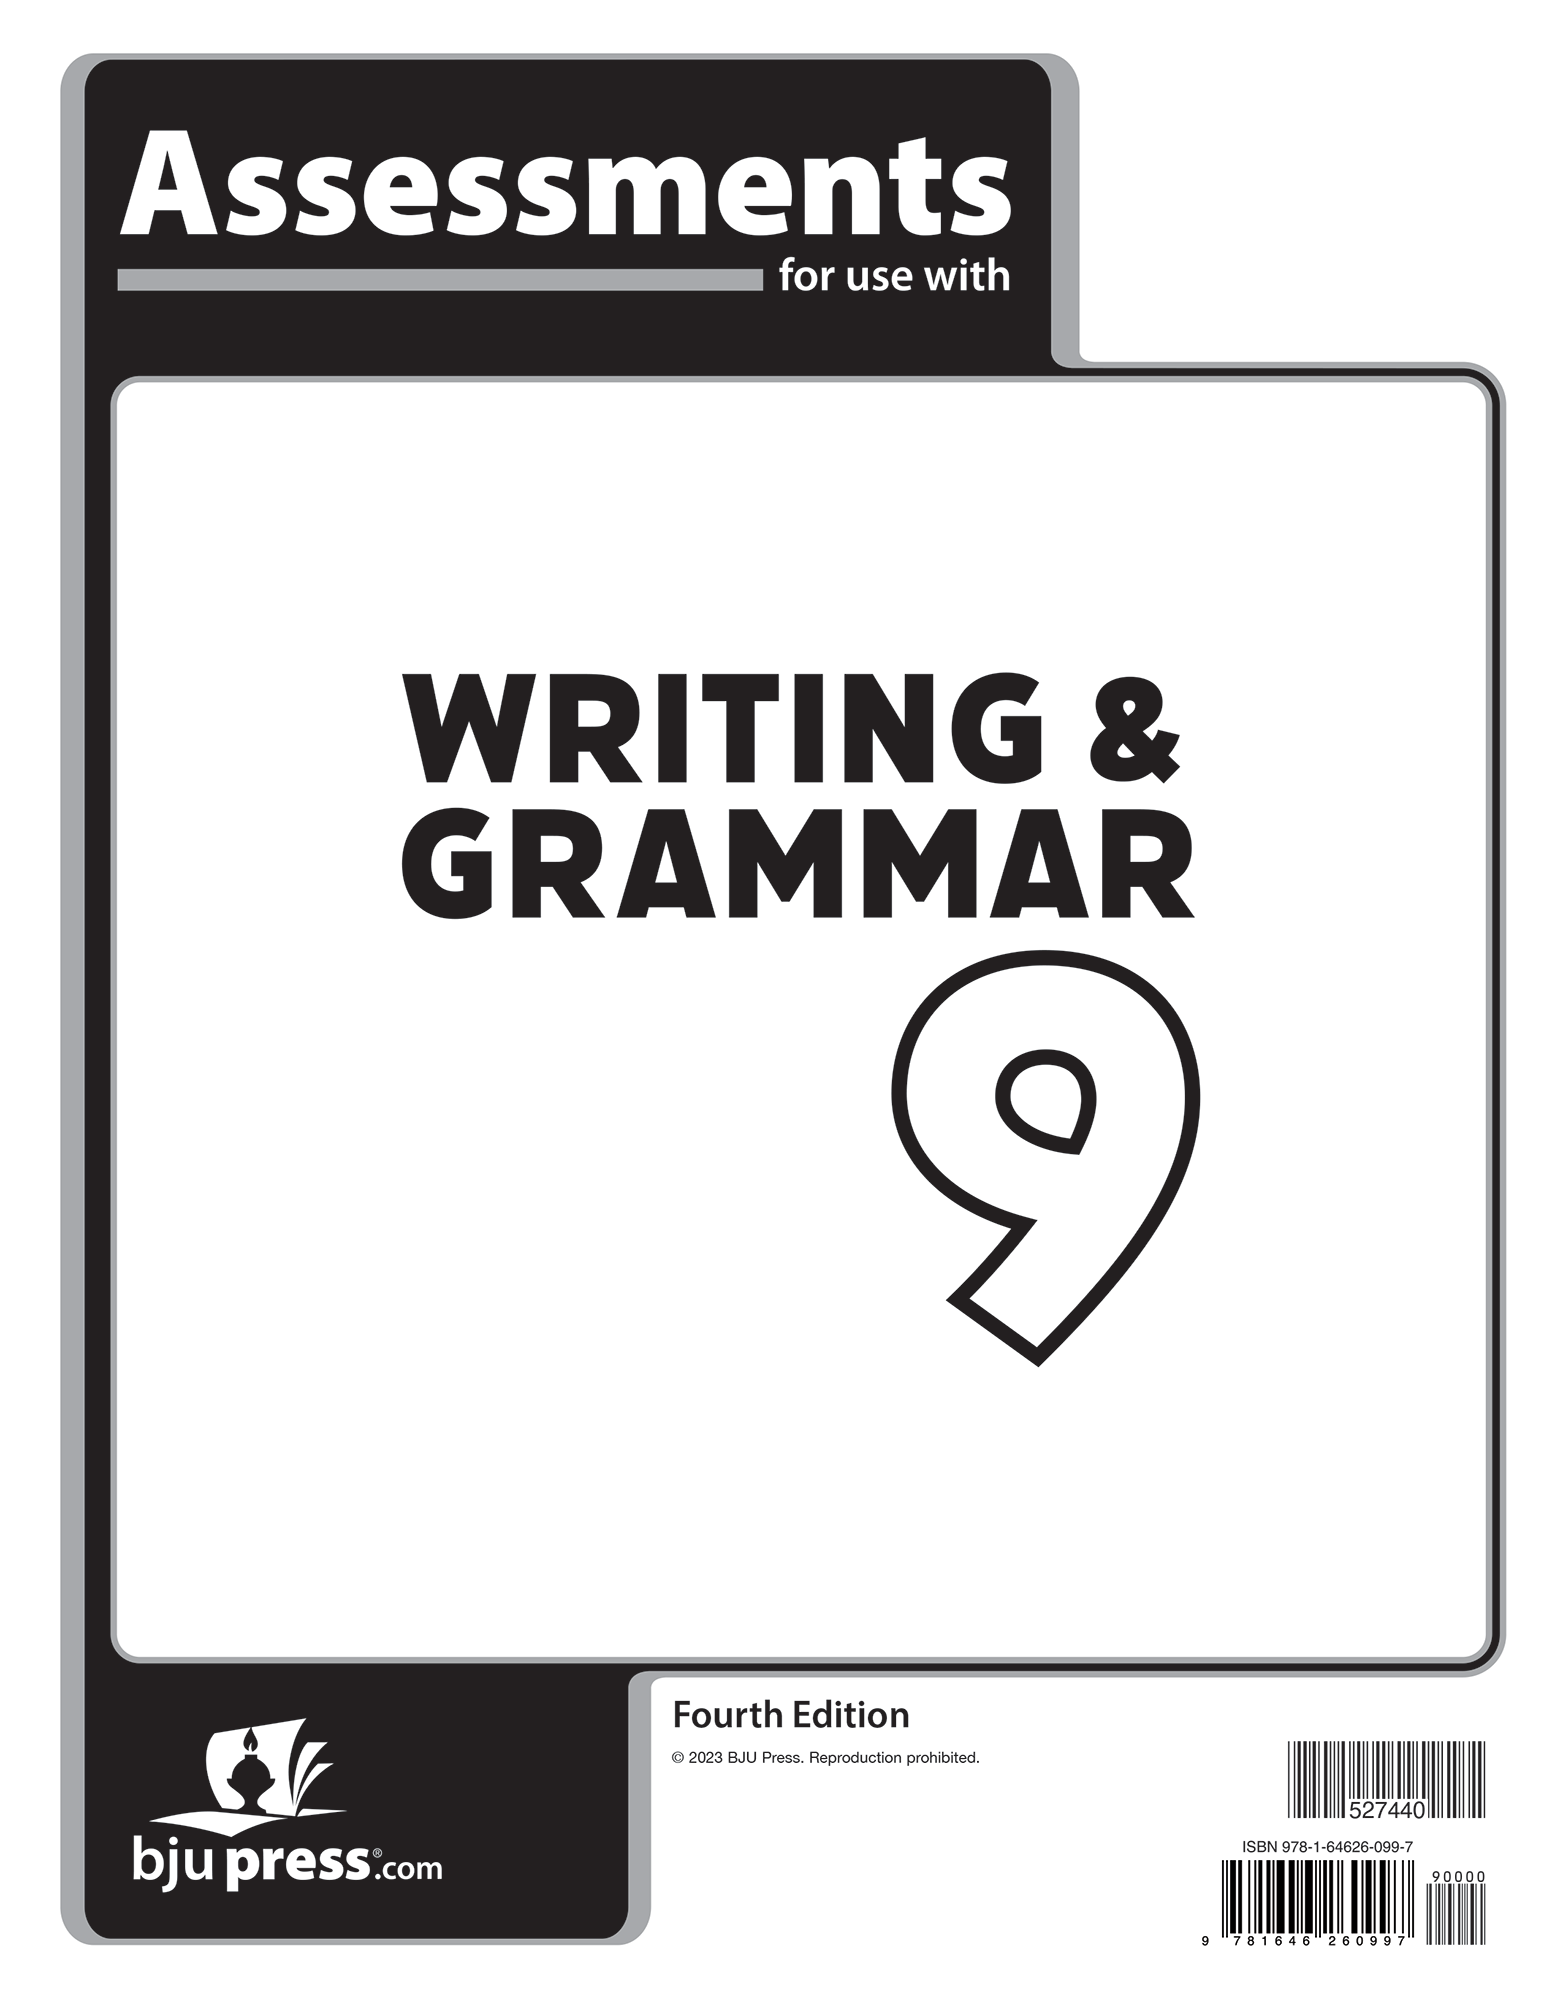 Writing & Grammar 9 Assessments, 4th ed.